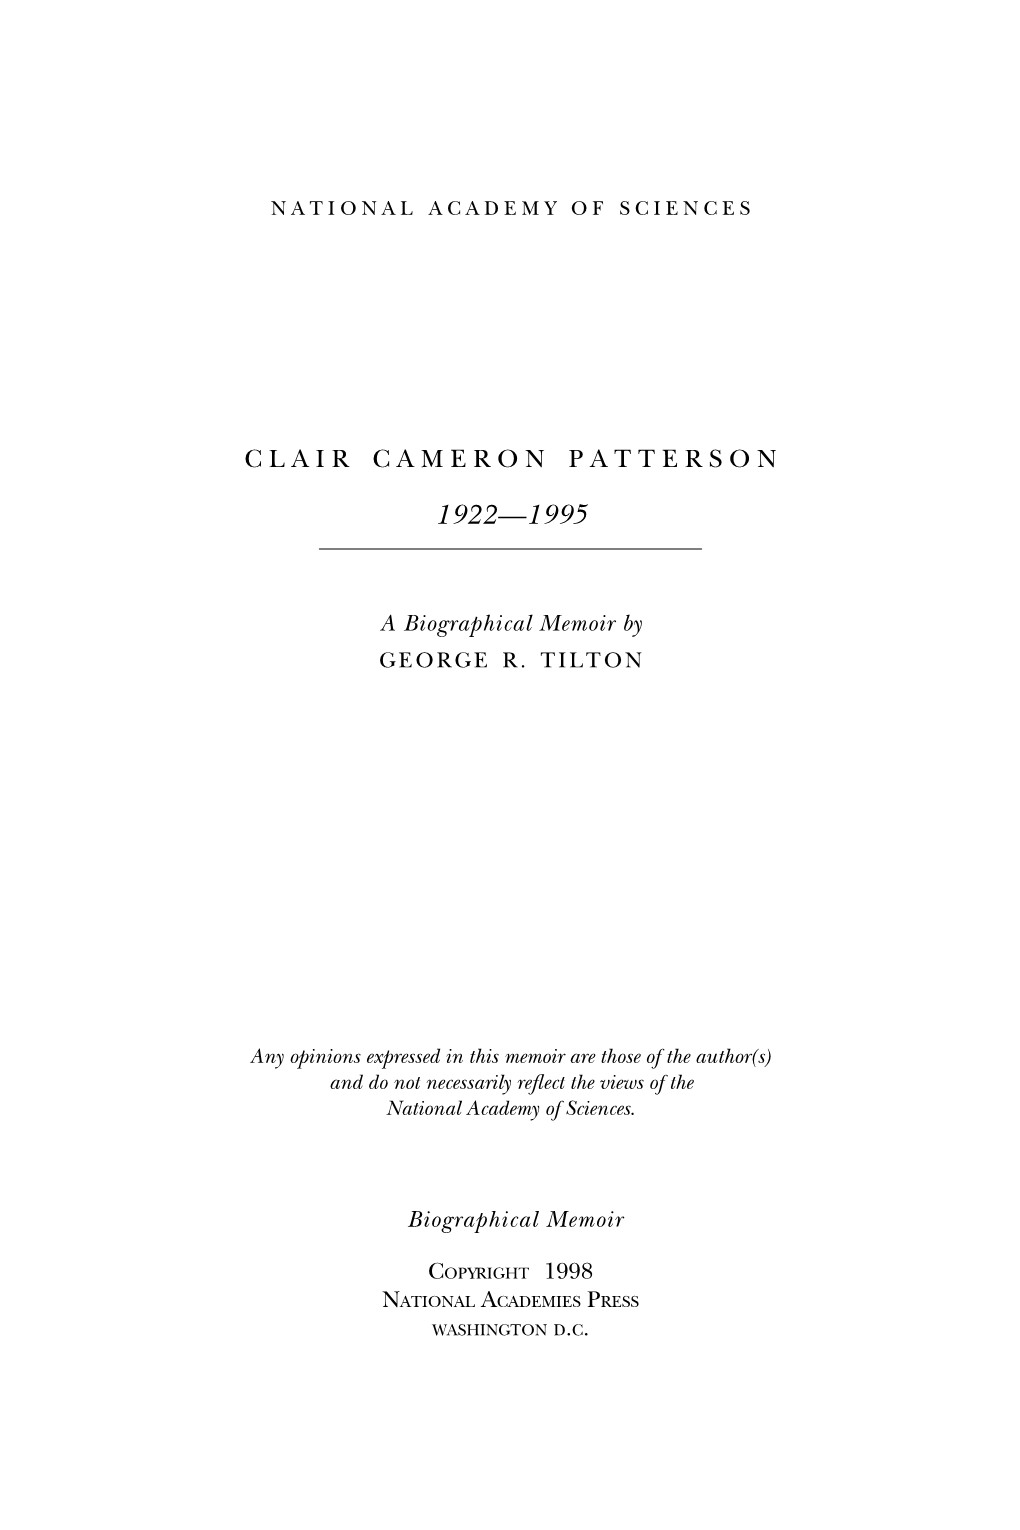 CLAIR CAMERON PATTERSON June 2, 1922 – December 5, 1995